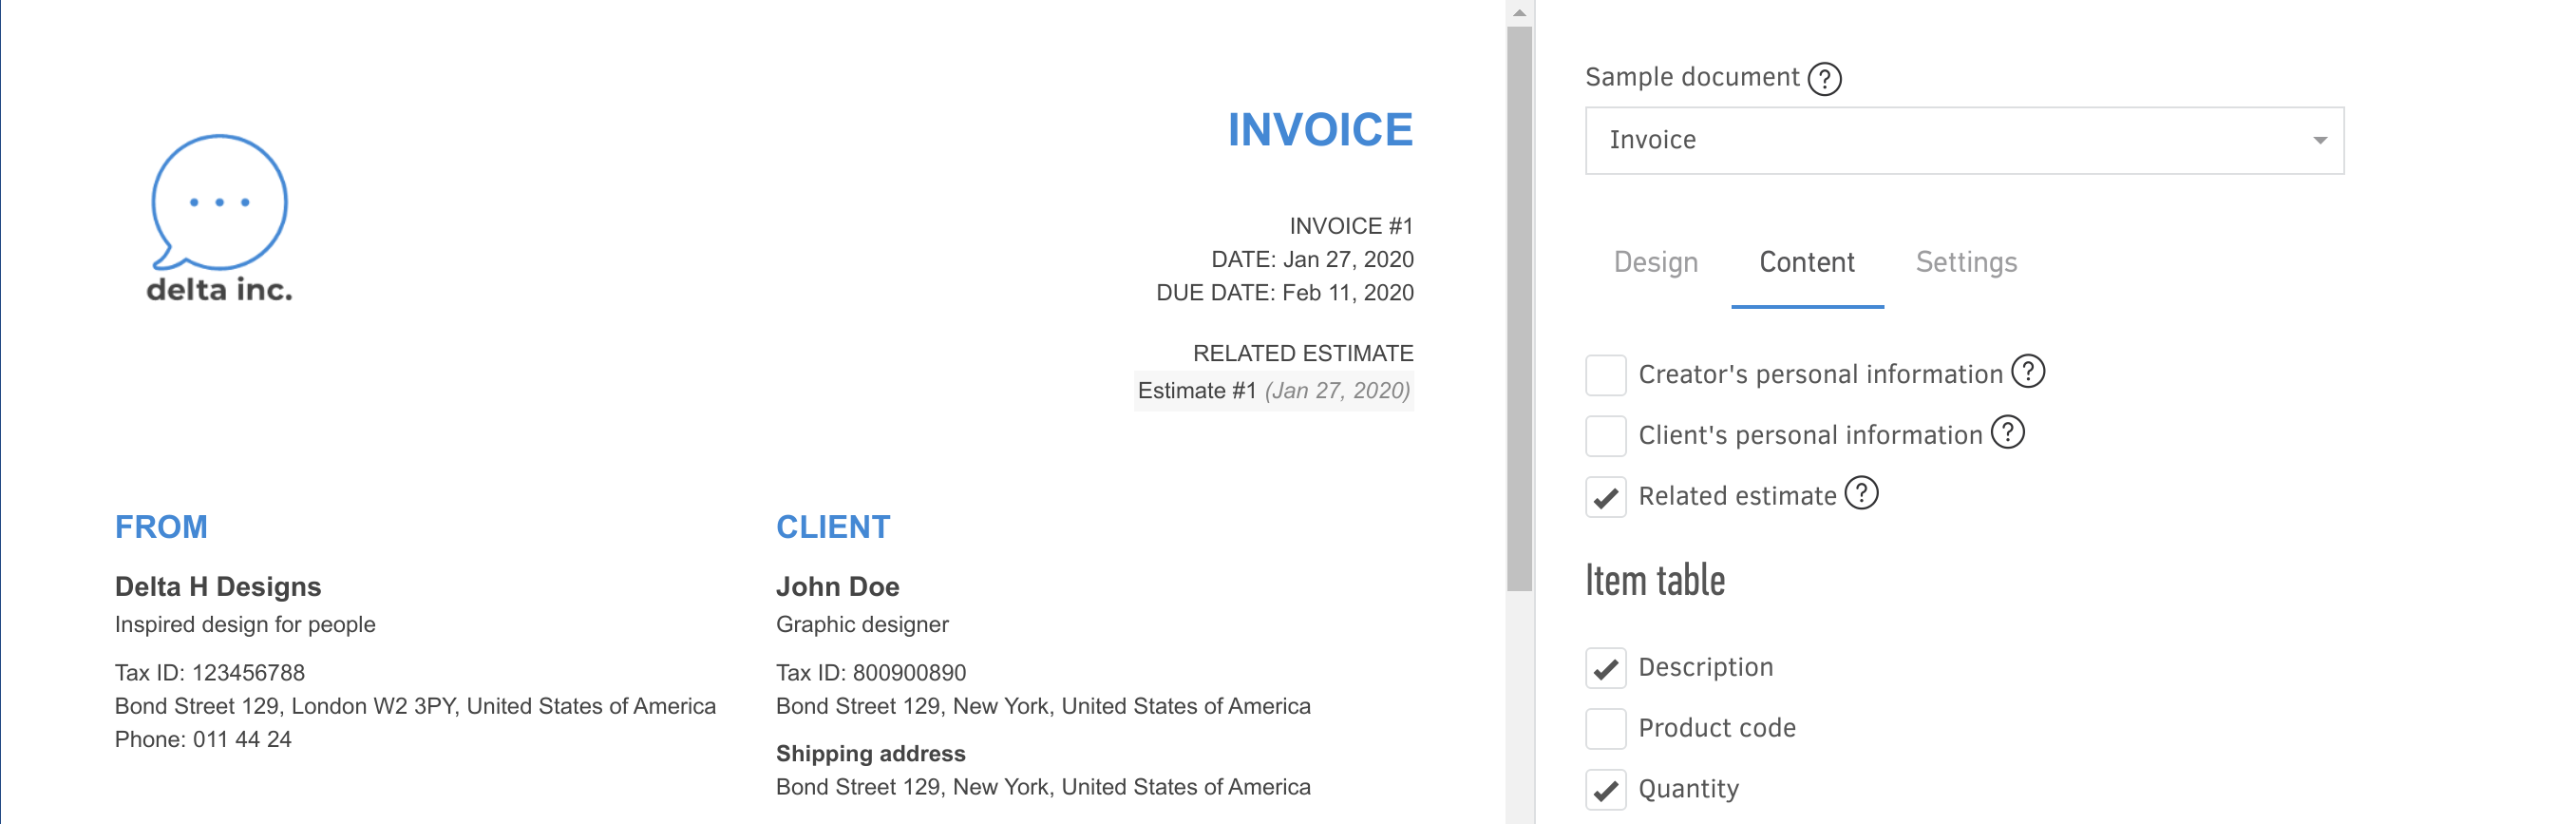 Show related estimates on the invoice PDF